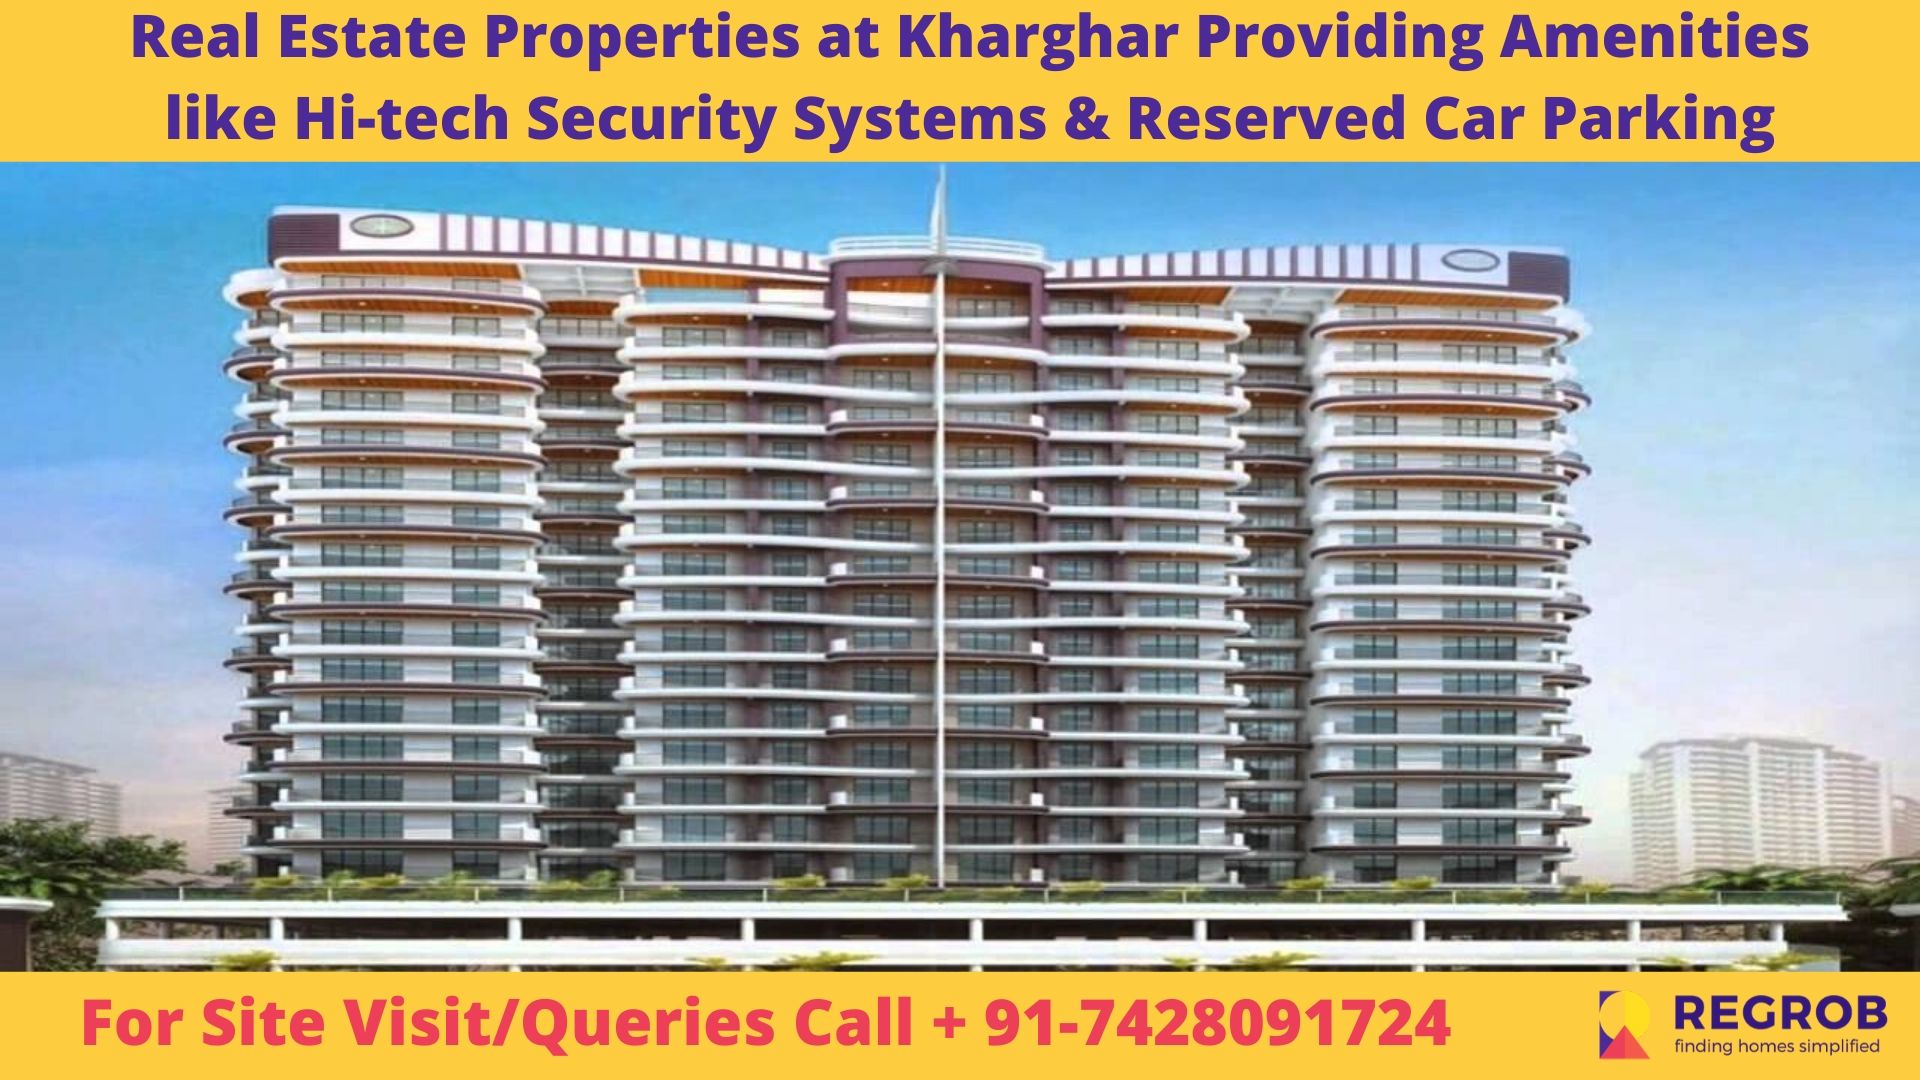 Real Estate Properties at Kharghar Providing Modern Amenities